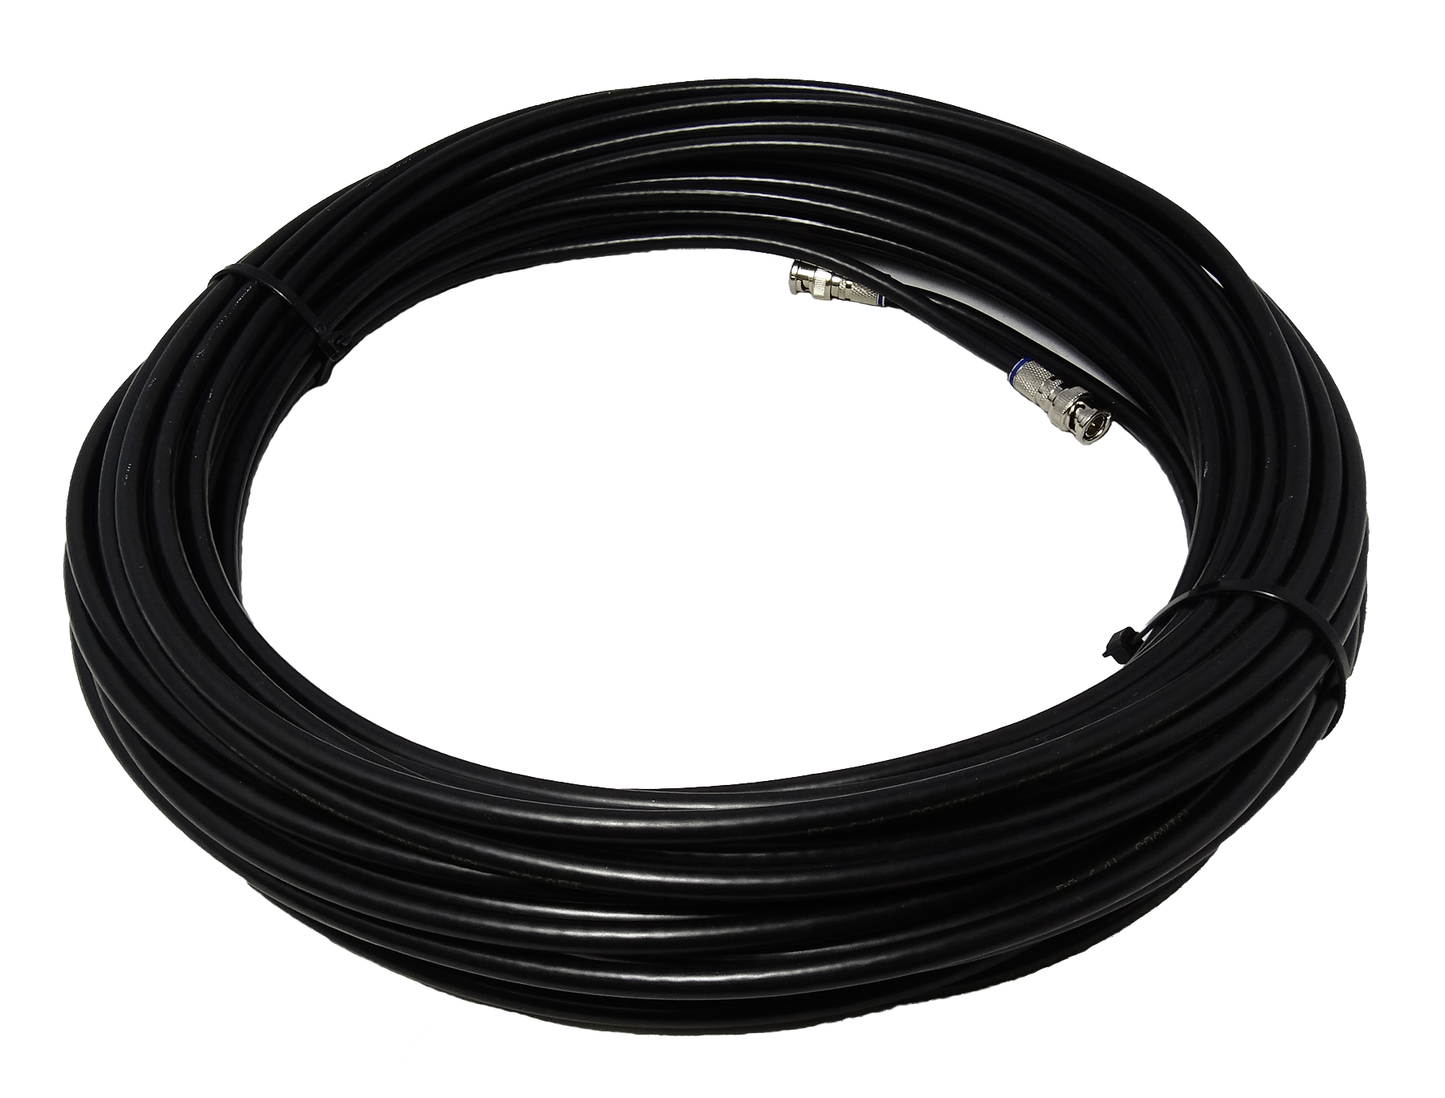 RiteAV - 100FT BNC Video Cable HD/SDI Digital Video - 75 Ohm (Indoor & Outdoor Rated) - Compression Connectors